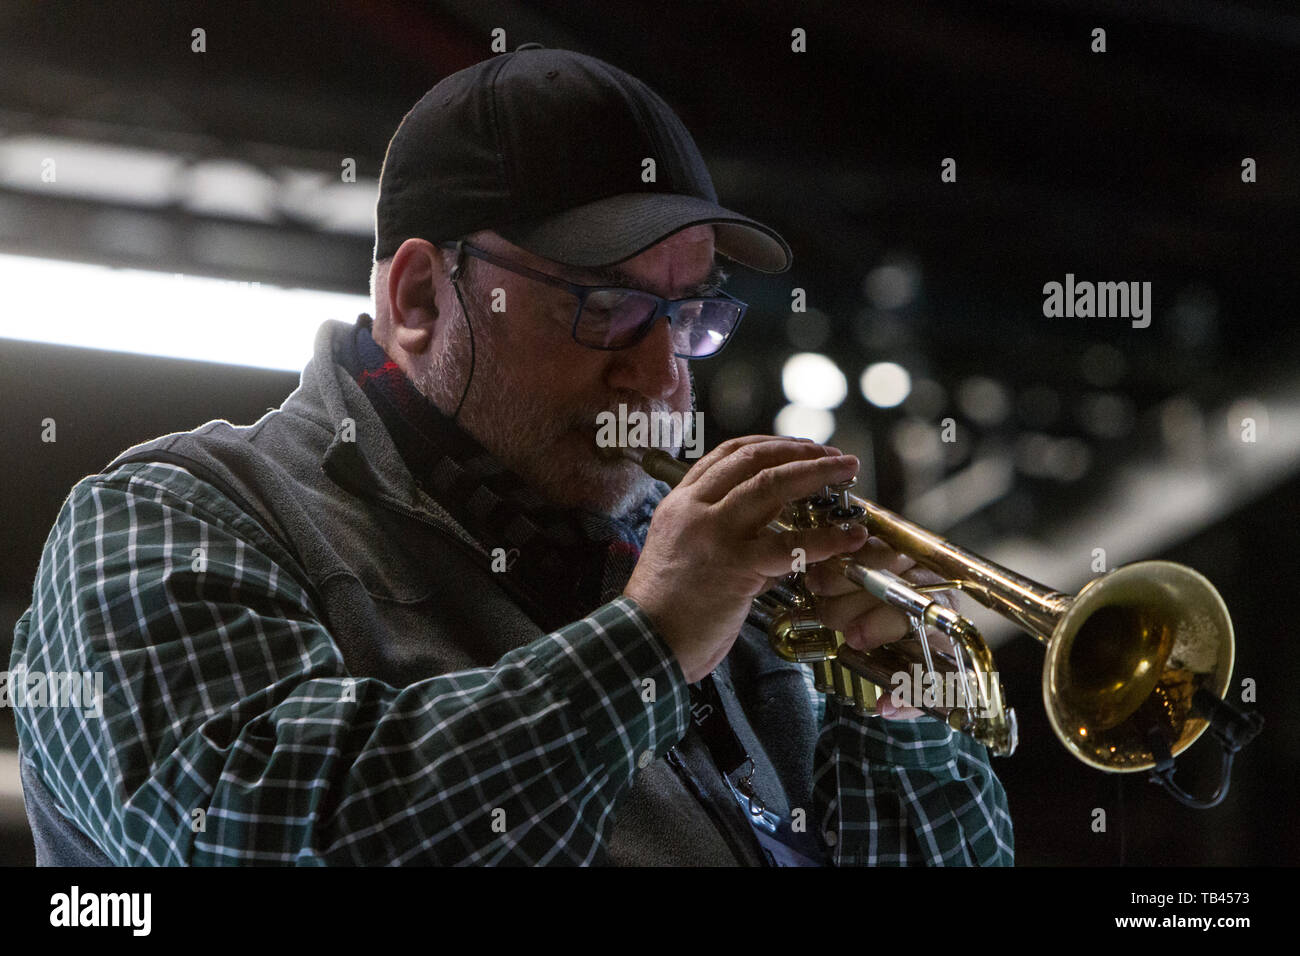 American trumpeter Randy Brecker at 2019 Torino Jazz Festival Stock Photo